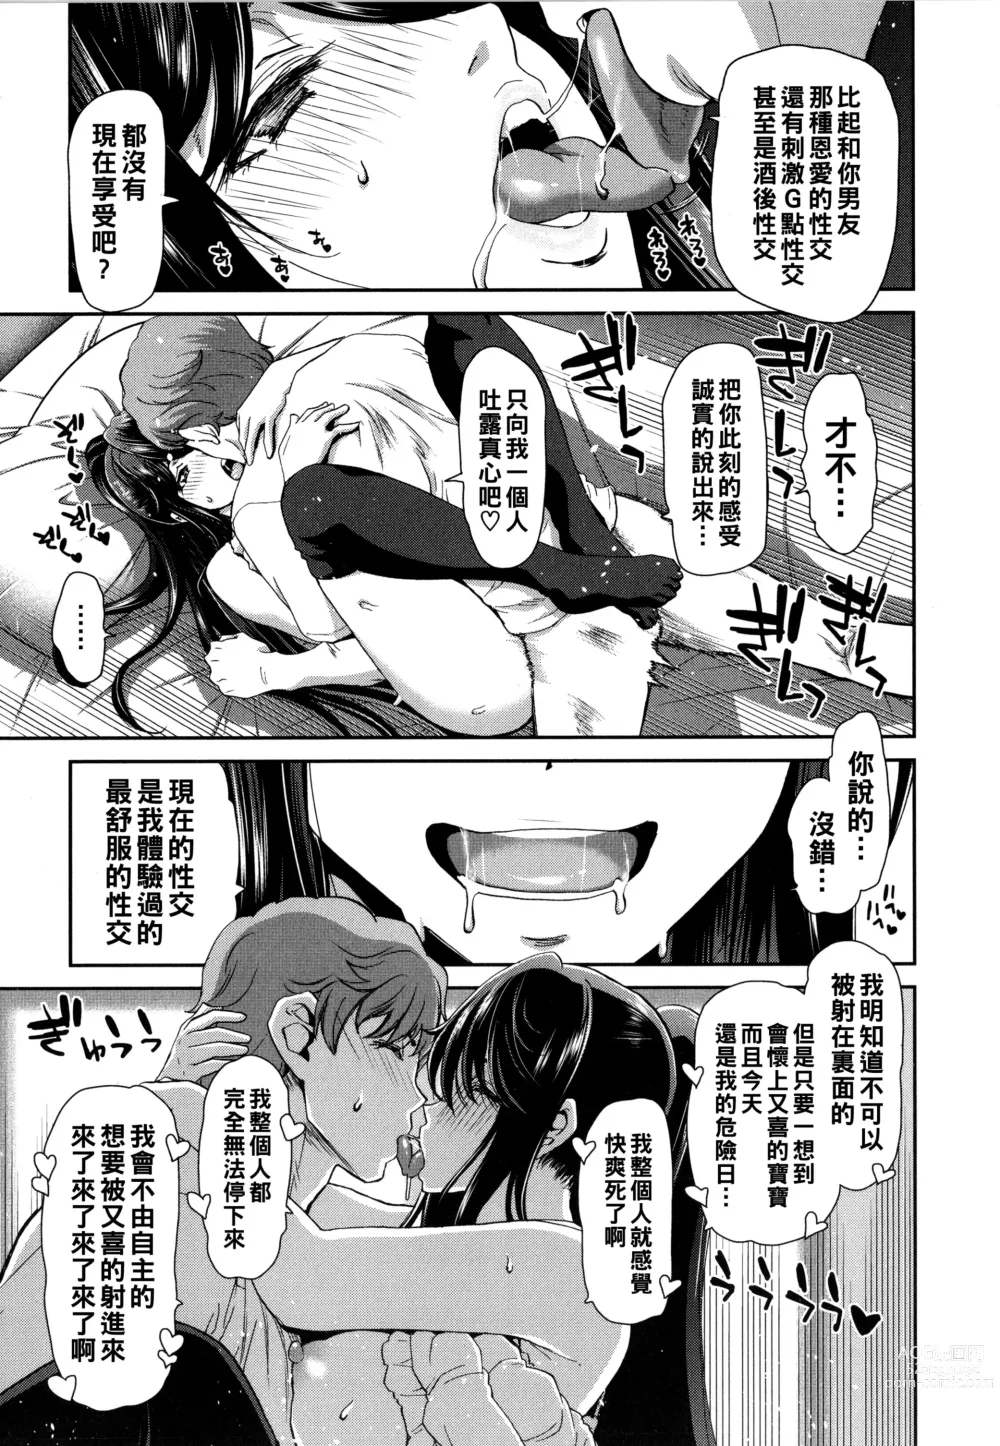 Page 177 of manga Iede Onna o Hirottara - When I picked up a runaway girl.